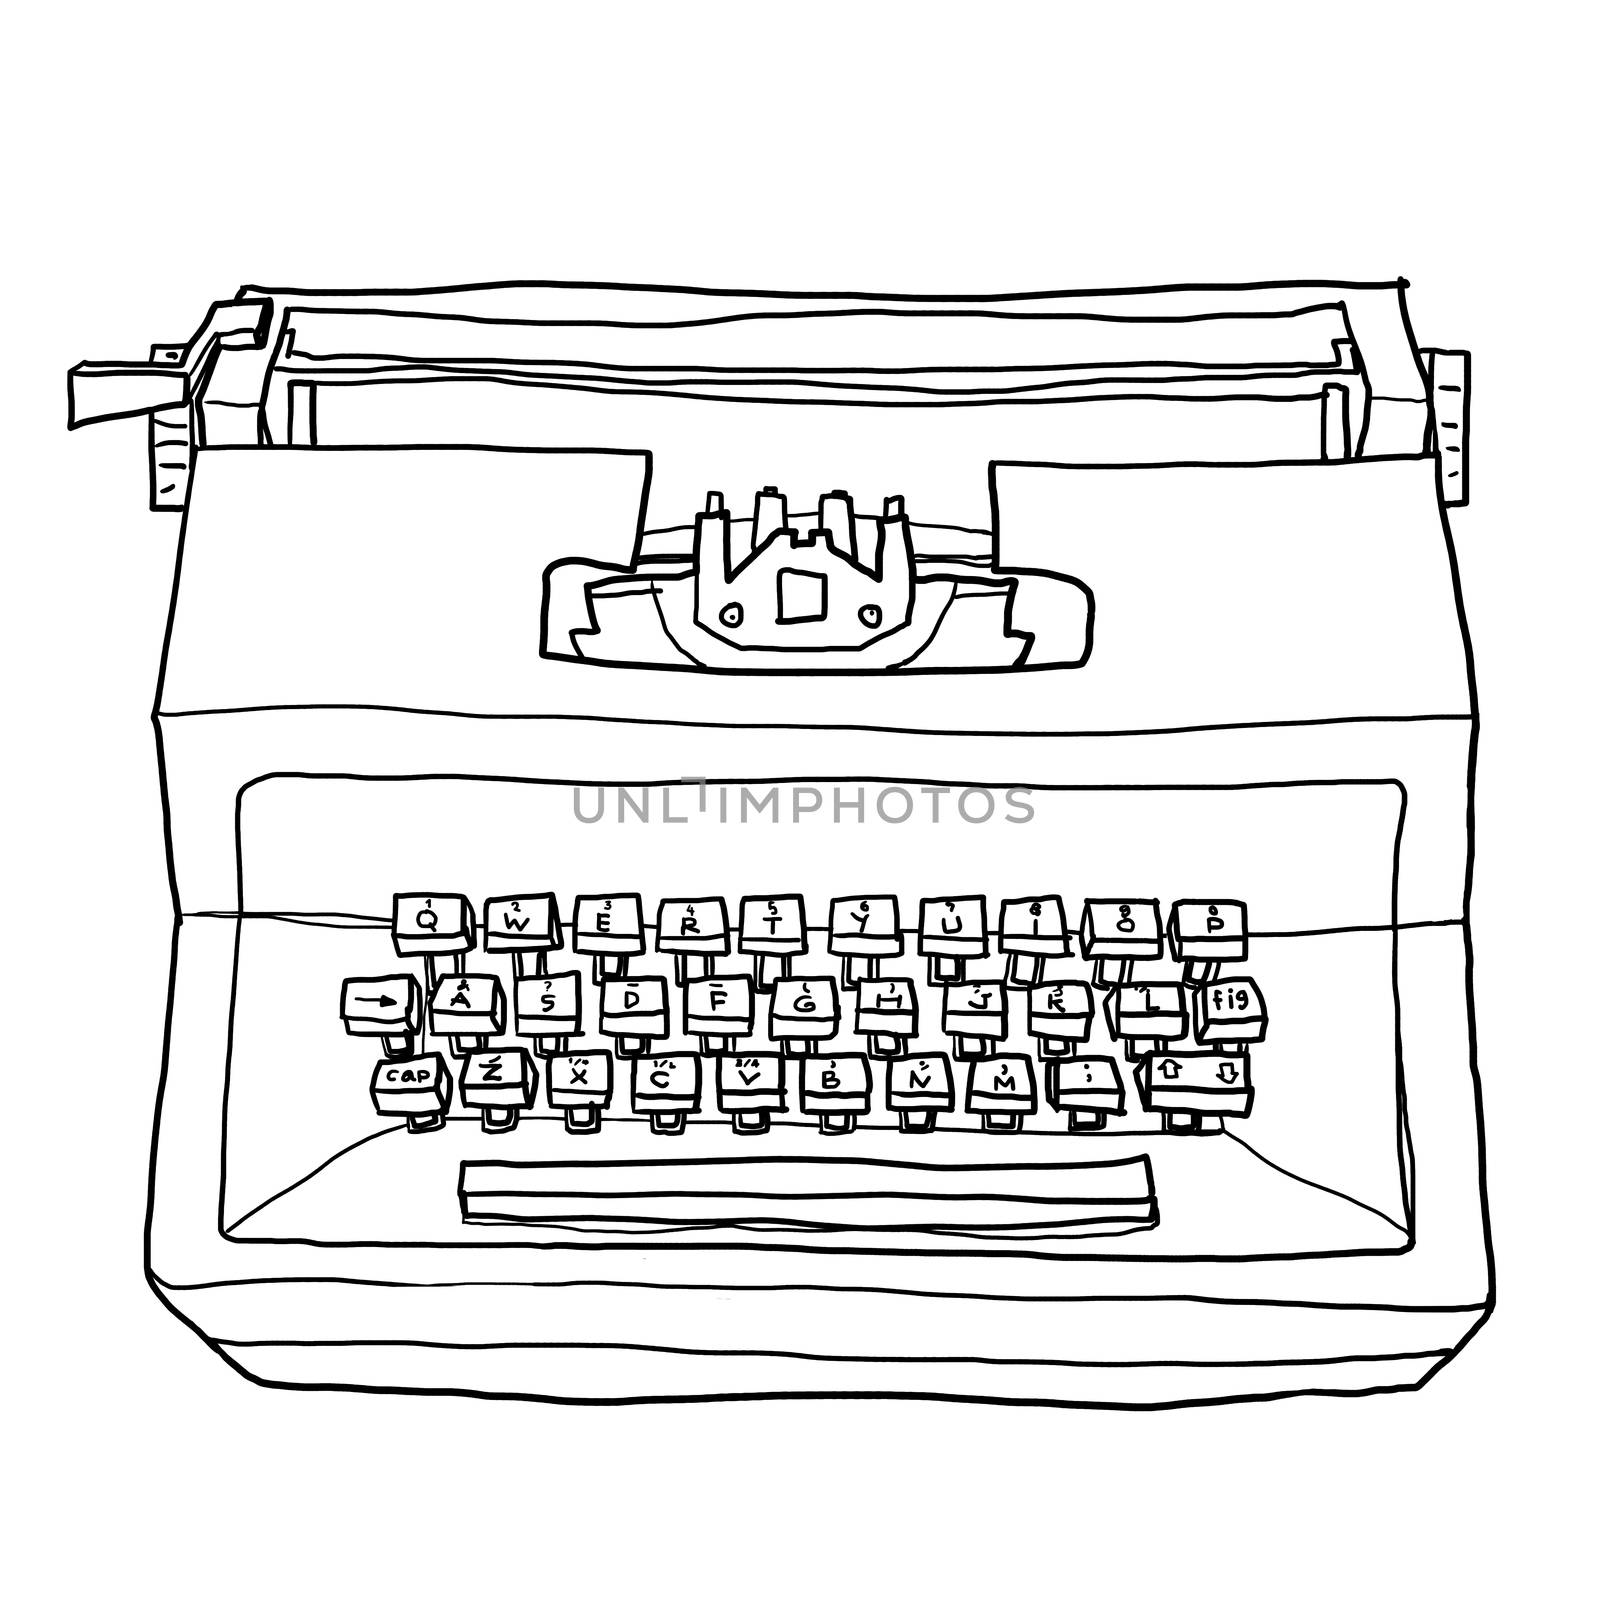 typewriter vintage toy cute hand drawn line art illustration